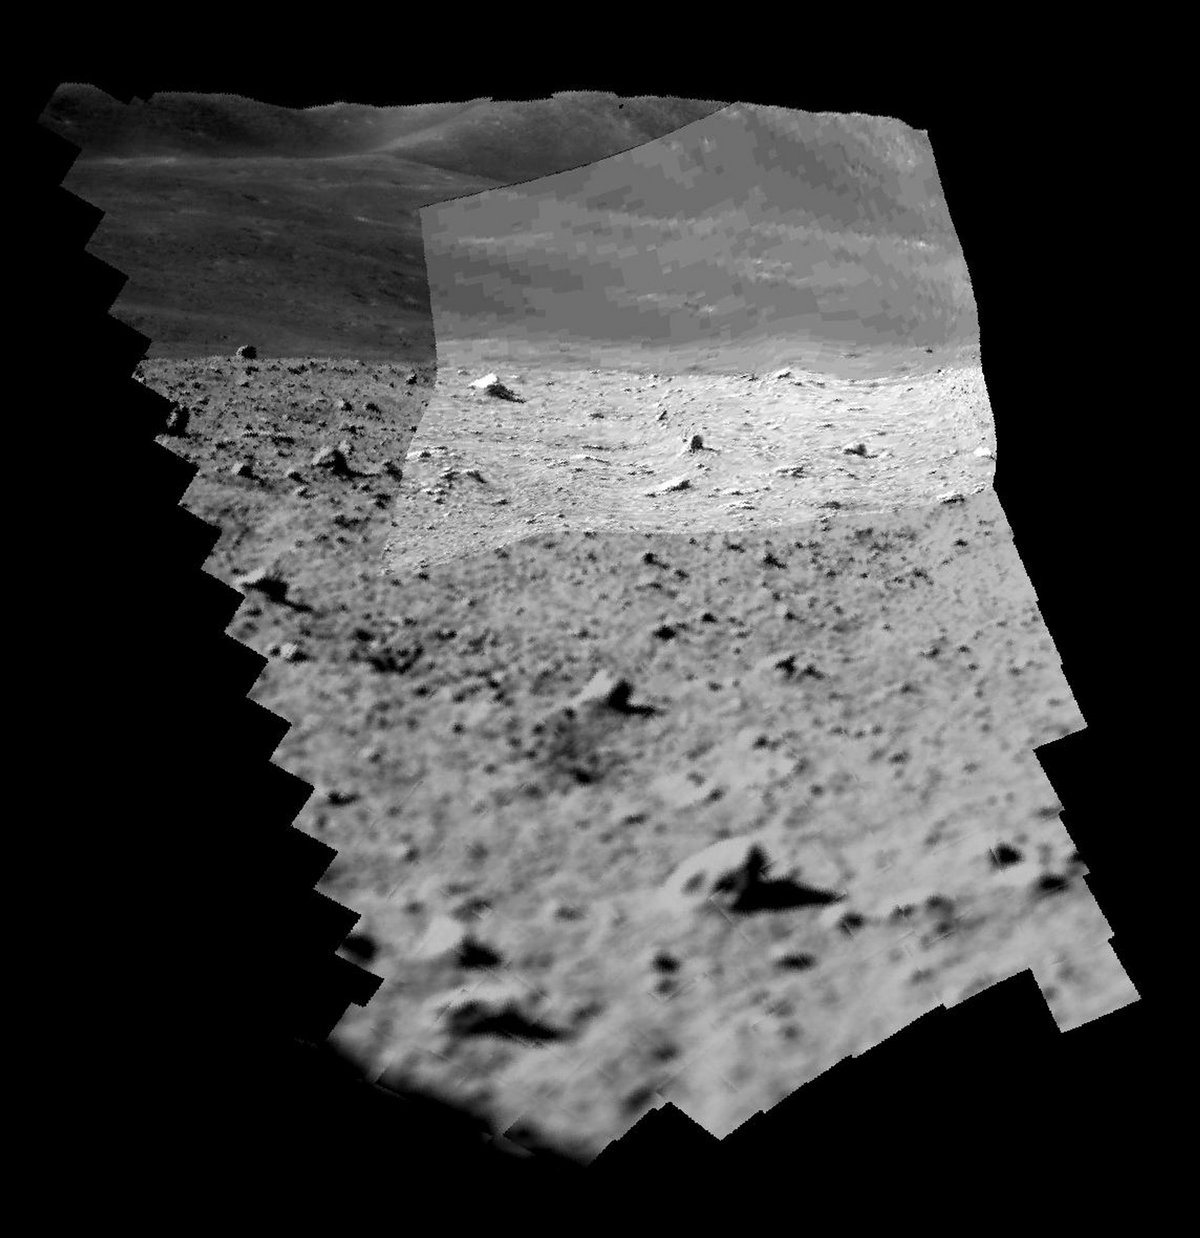 SLIM image from the lunar surface © JAXA